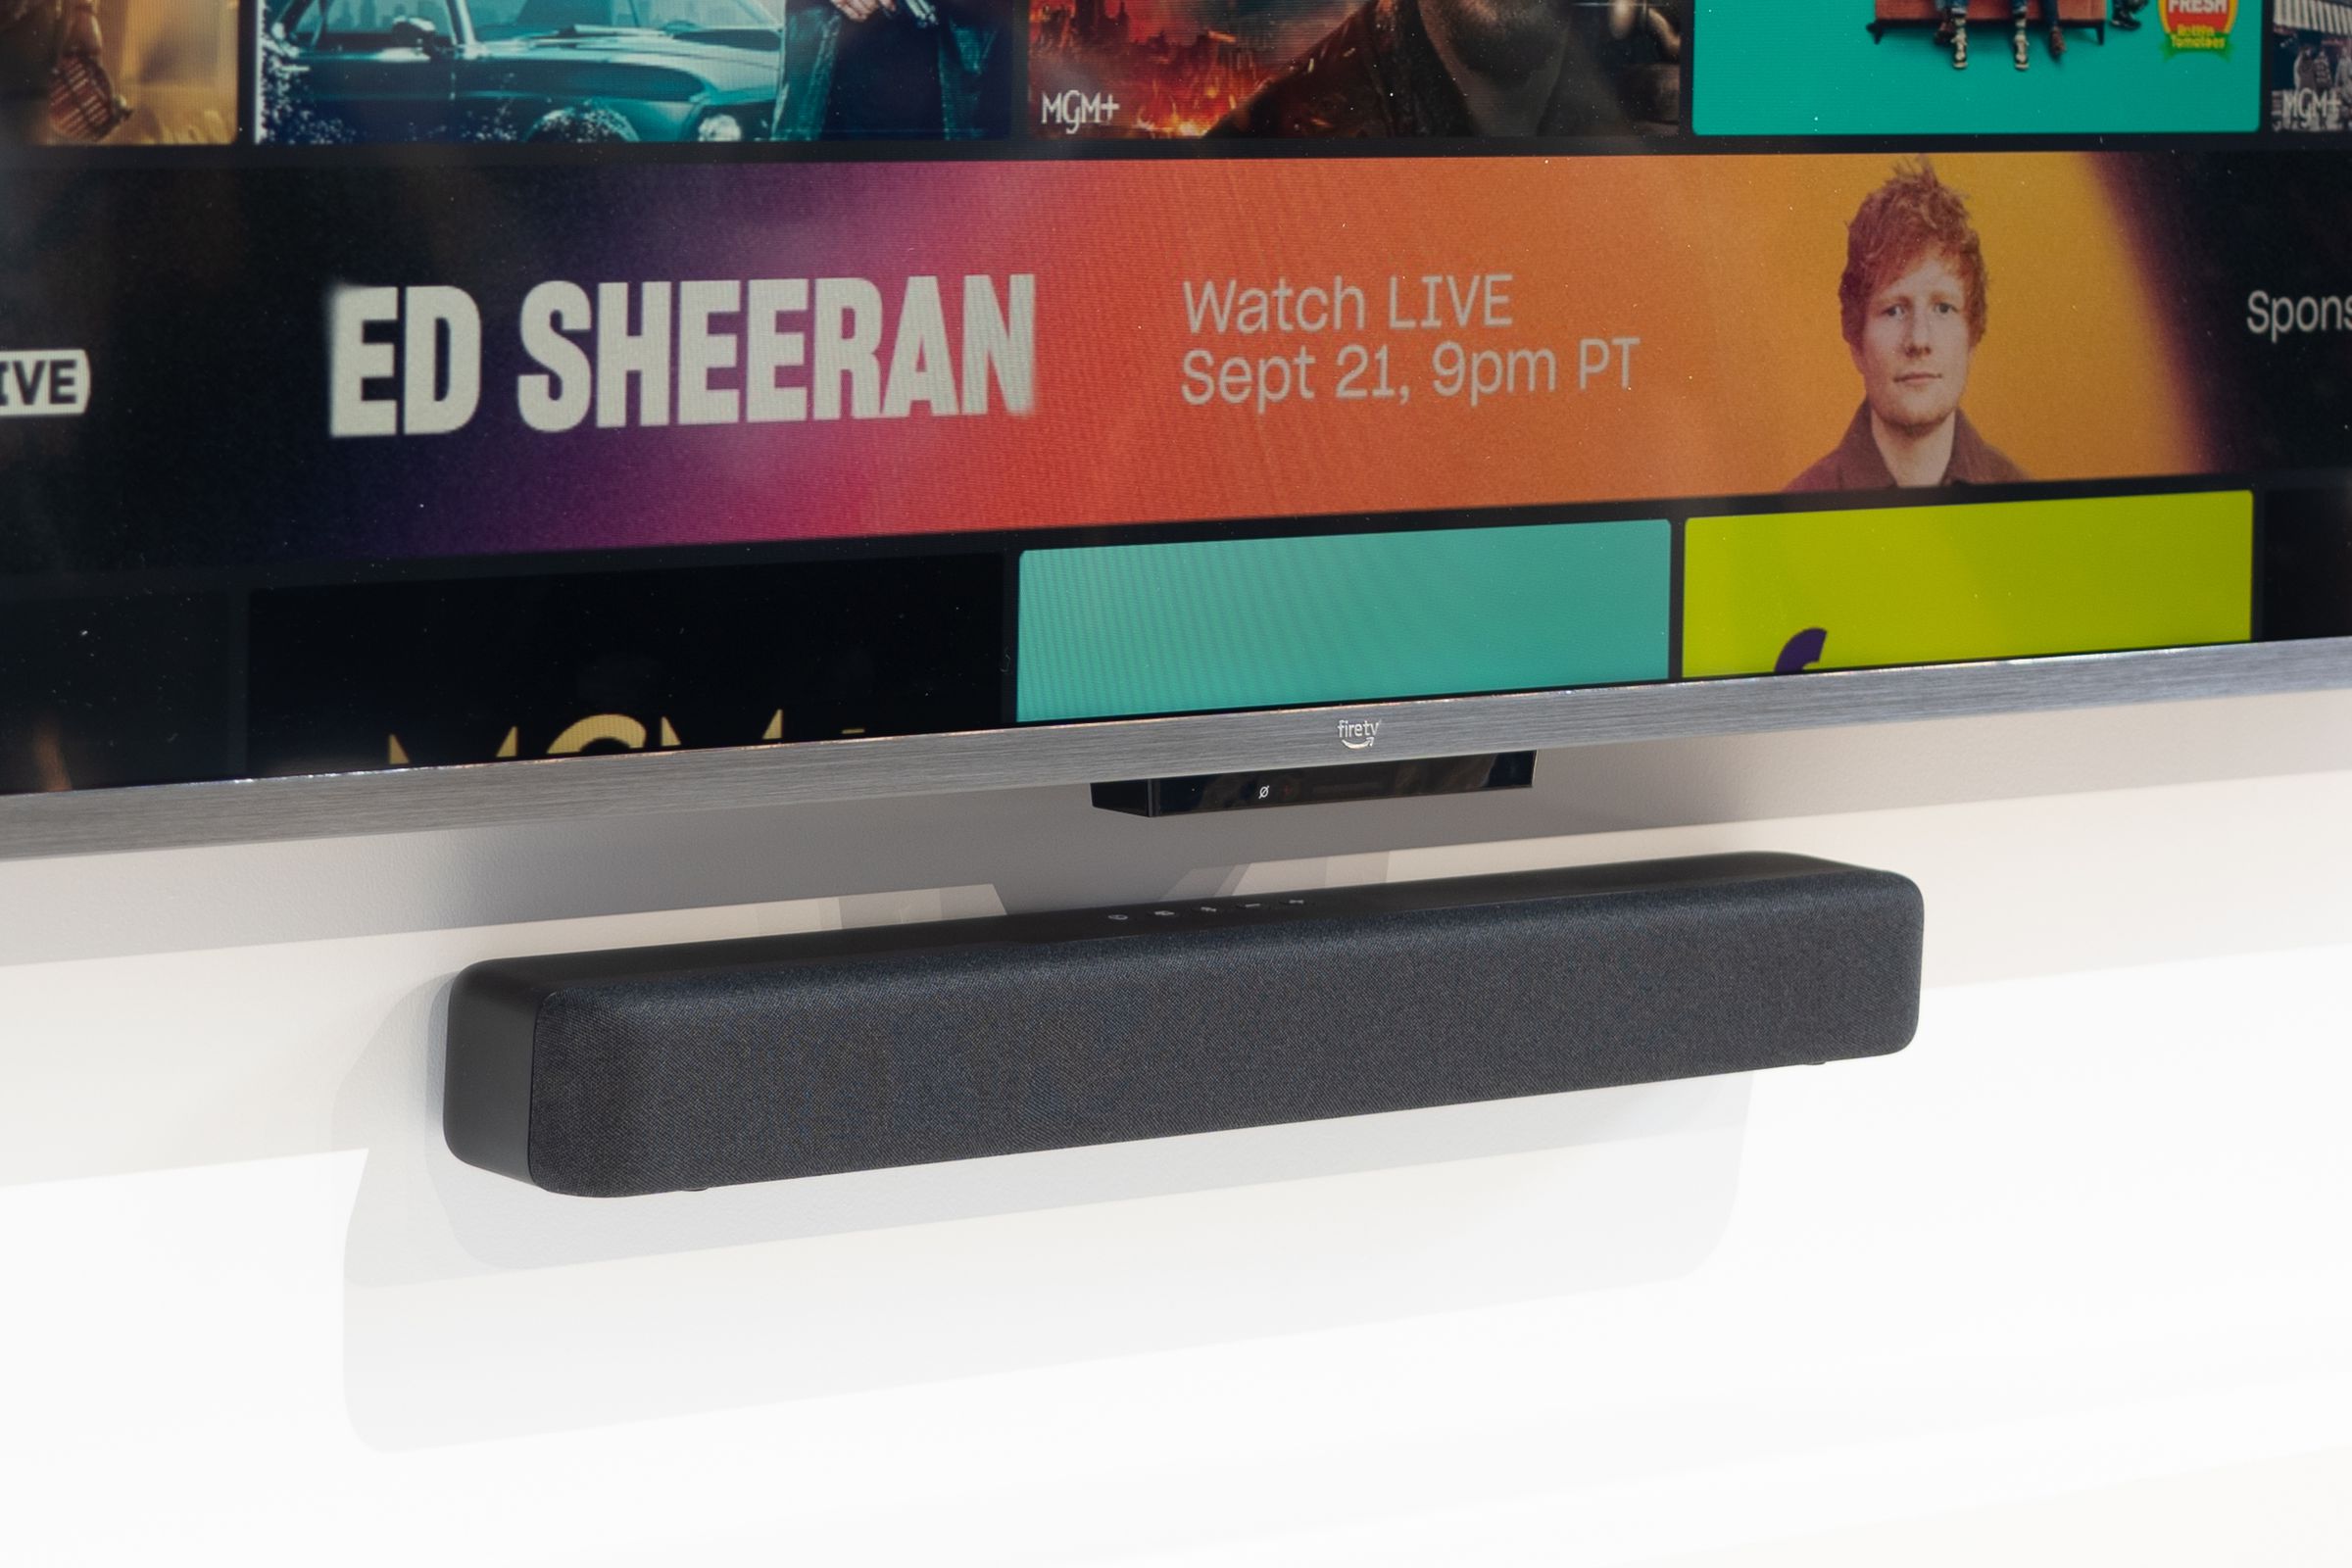 An image of a small black soundbar mounted on a wall beneath a TV.